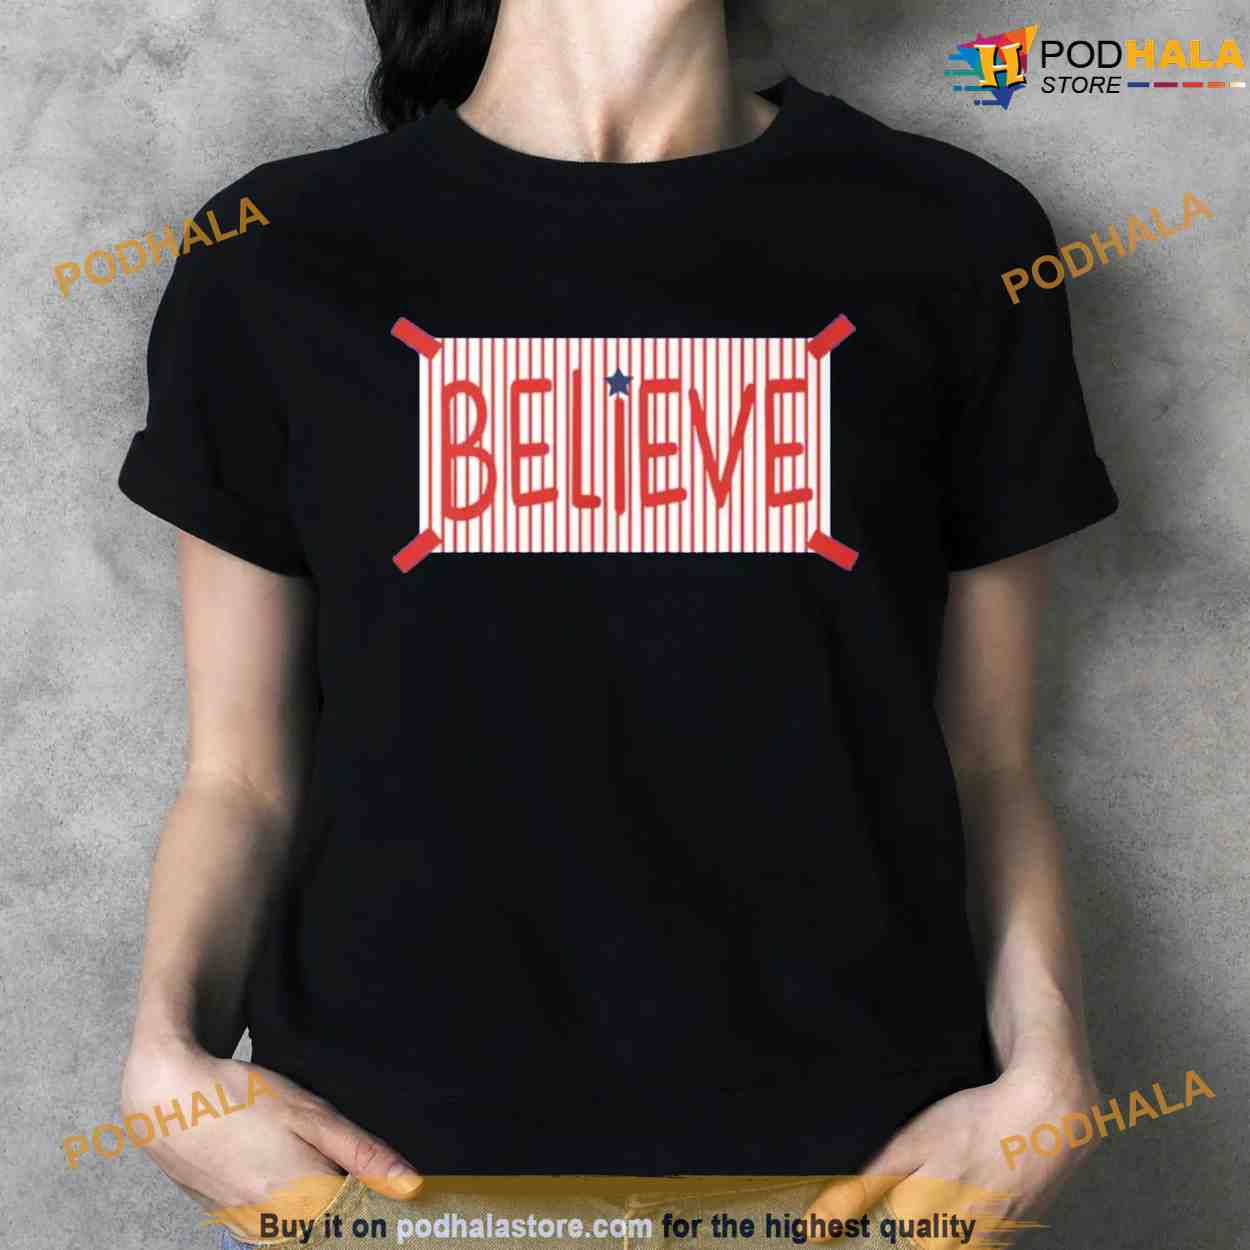 Believe philadelphia phillies shirt - MobiApparel